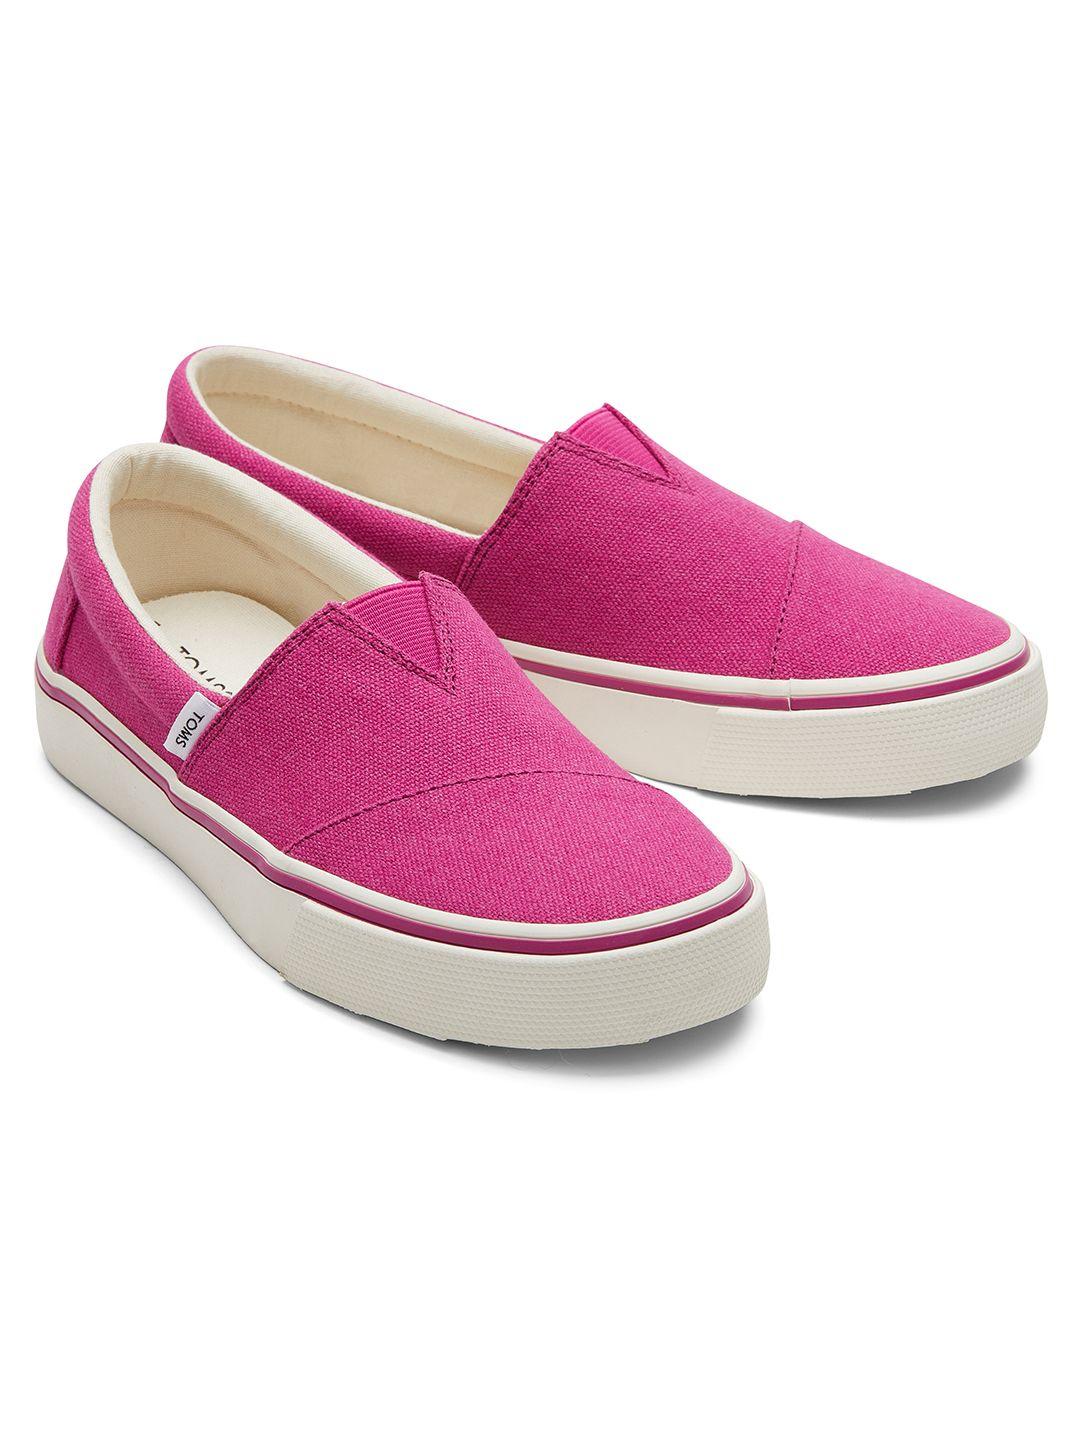 TOMS Women Pink Slip-On Sneakers